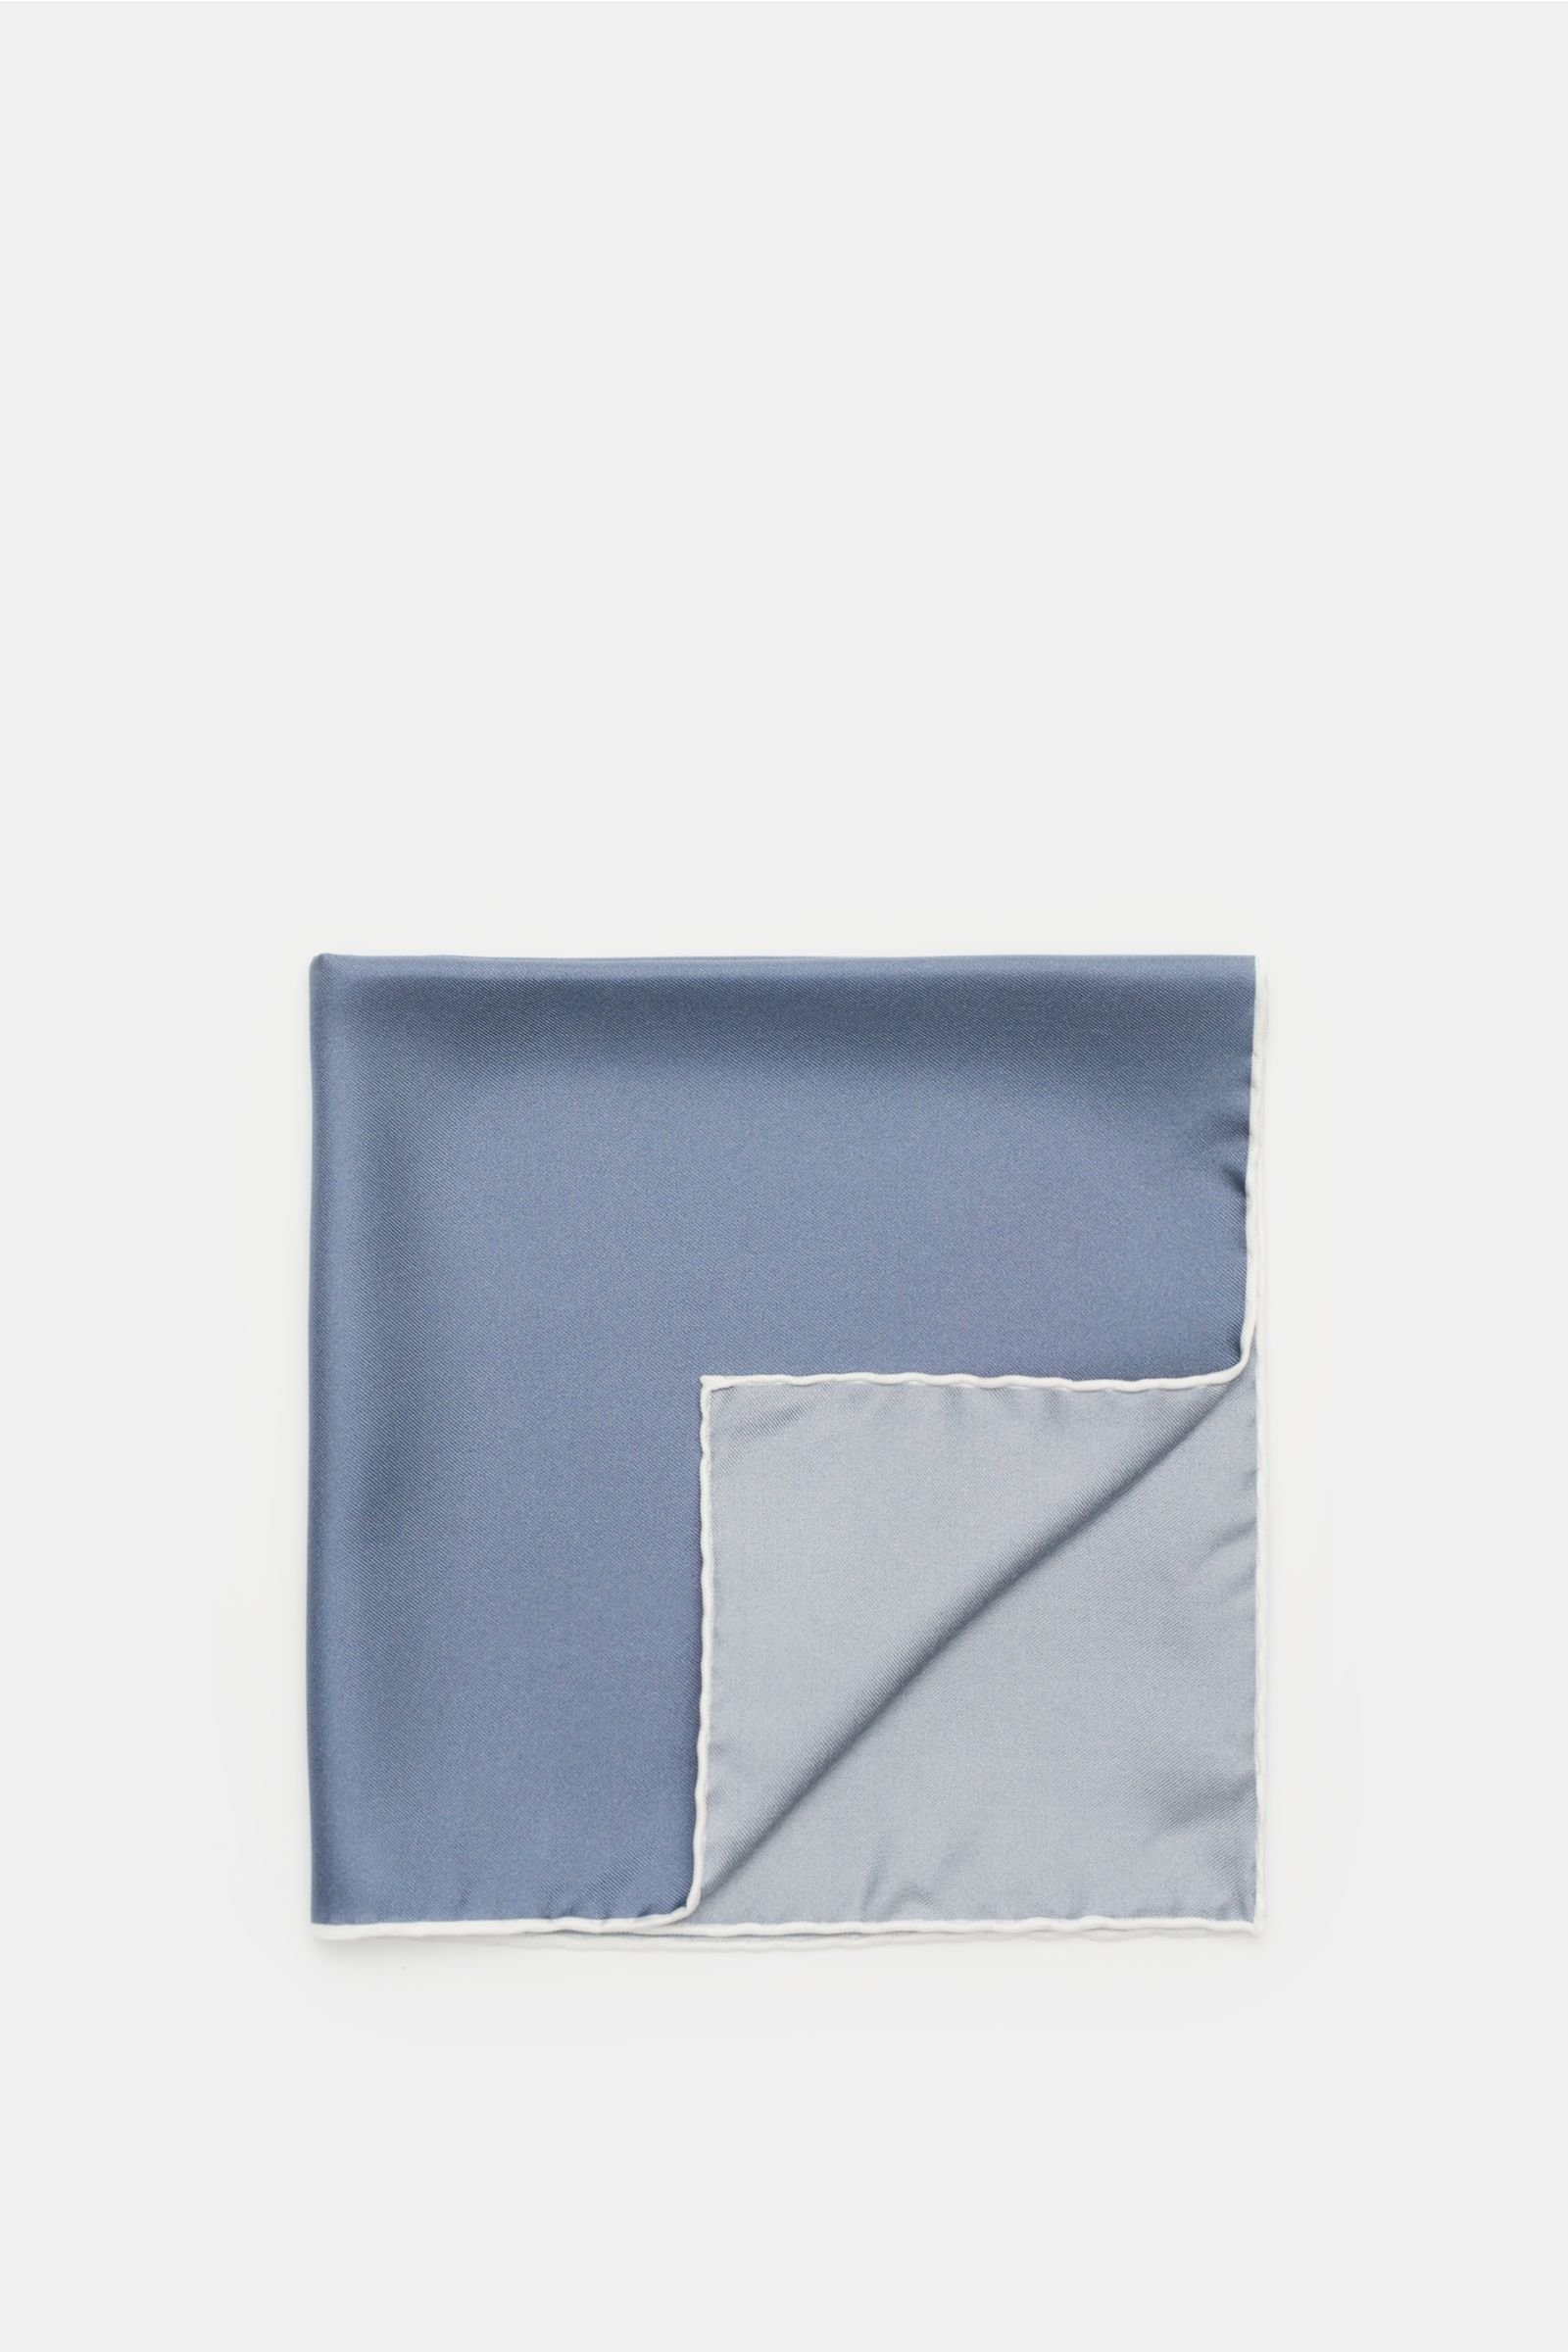 Pocket square grey-blue